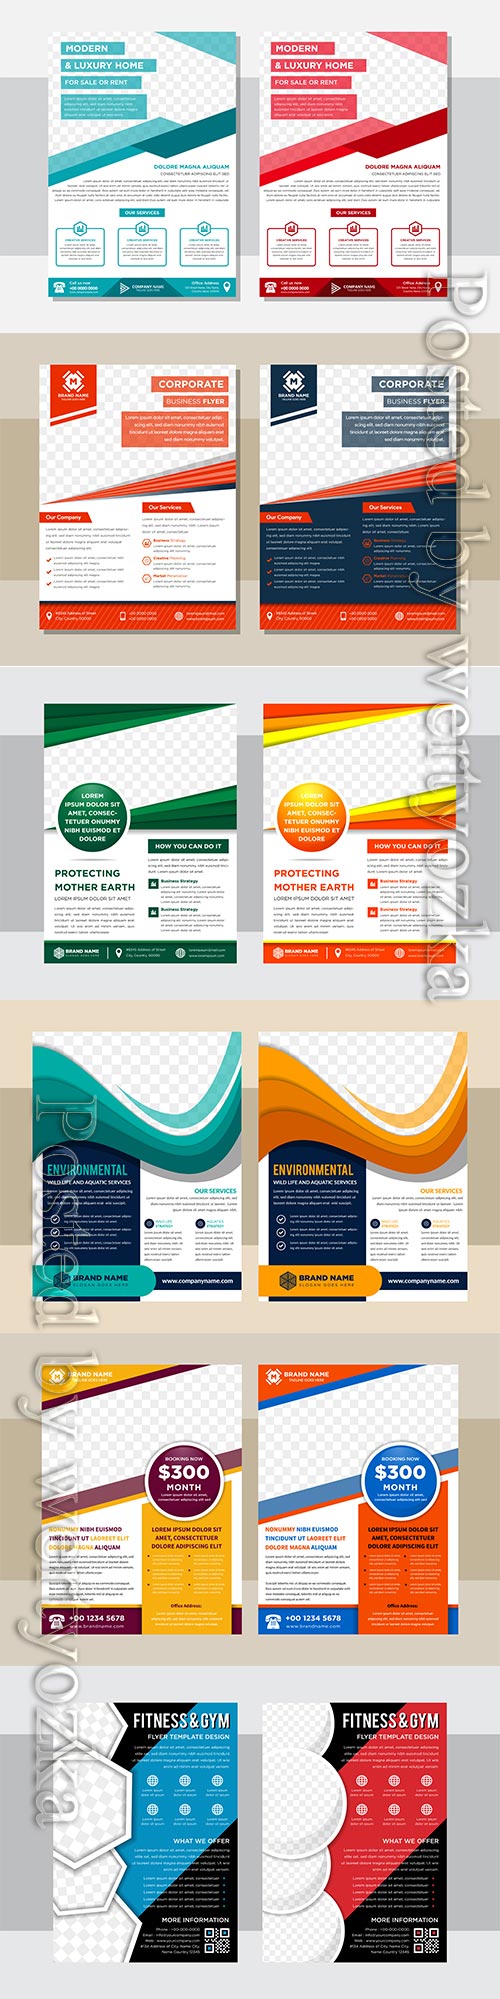 Business flyer template design, brochure vector illustration # 4